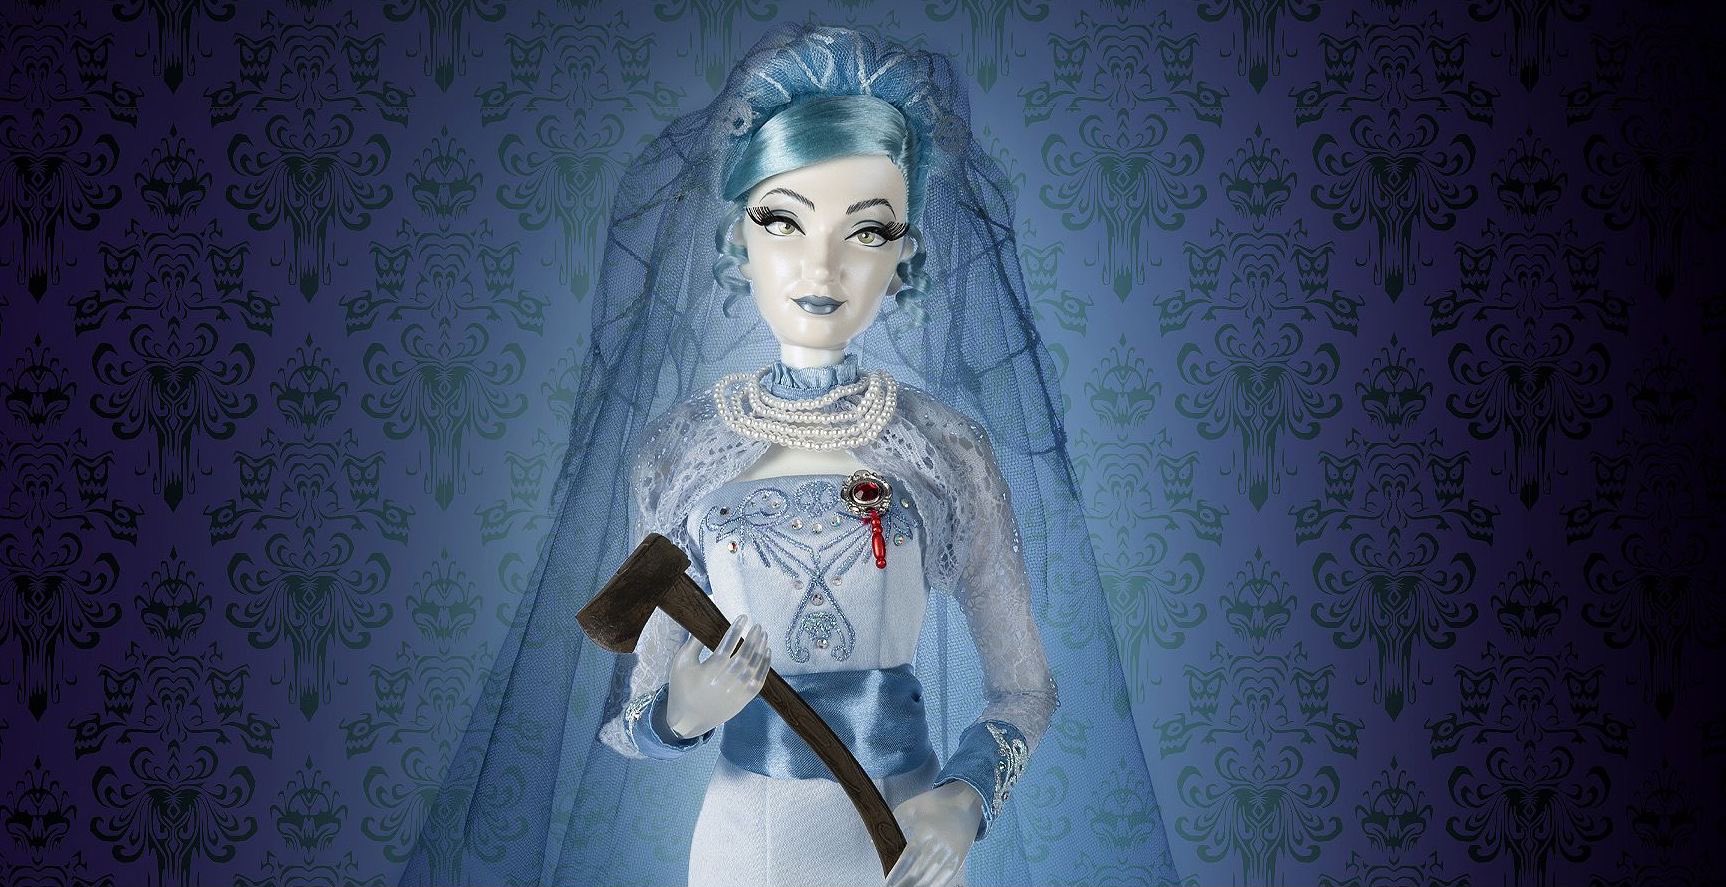 Disney Limited Edition Haunted Mansion Bride doll